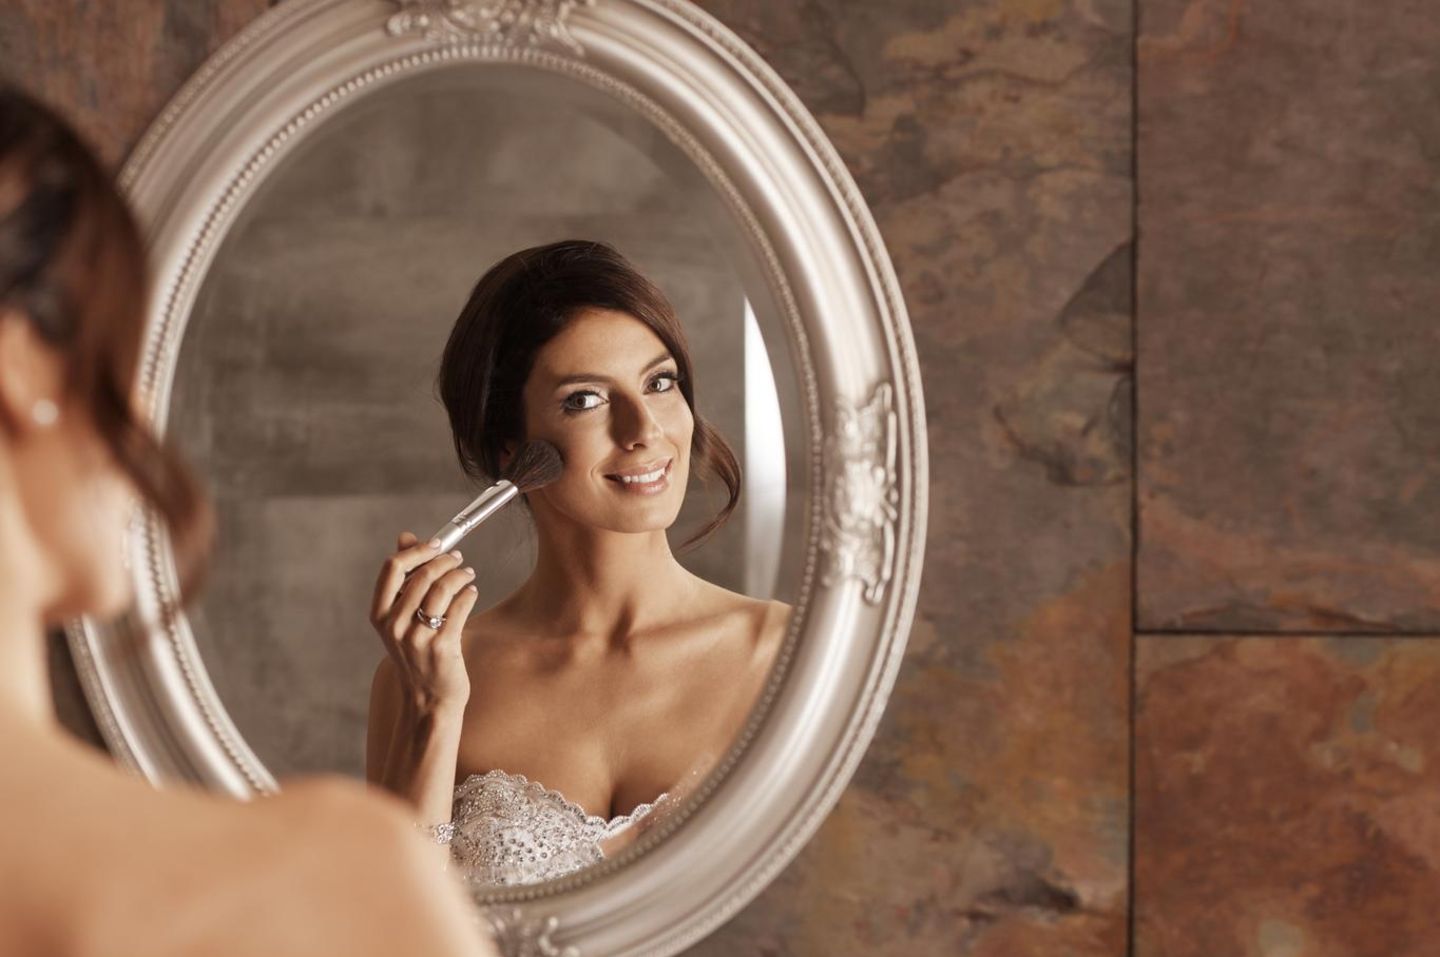 Hochzeits-Make-up selber schminken: So geht's